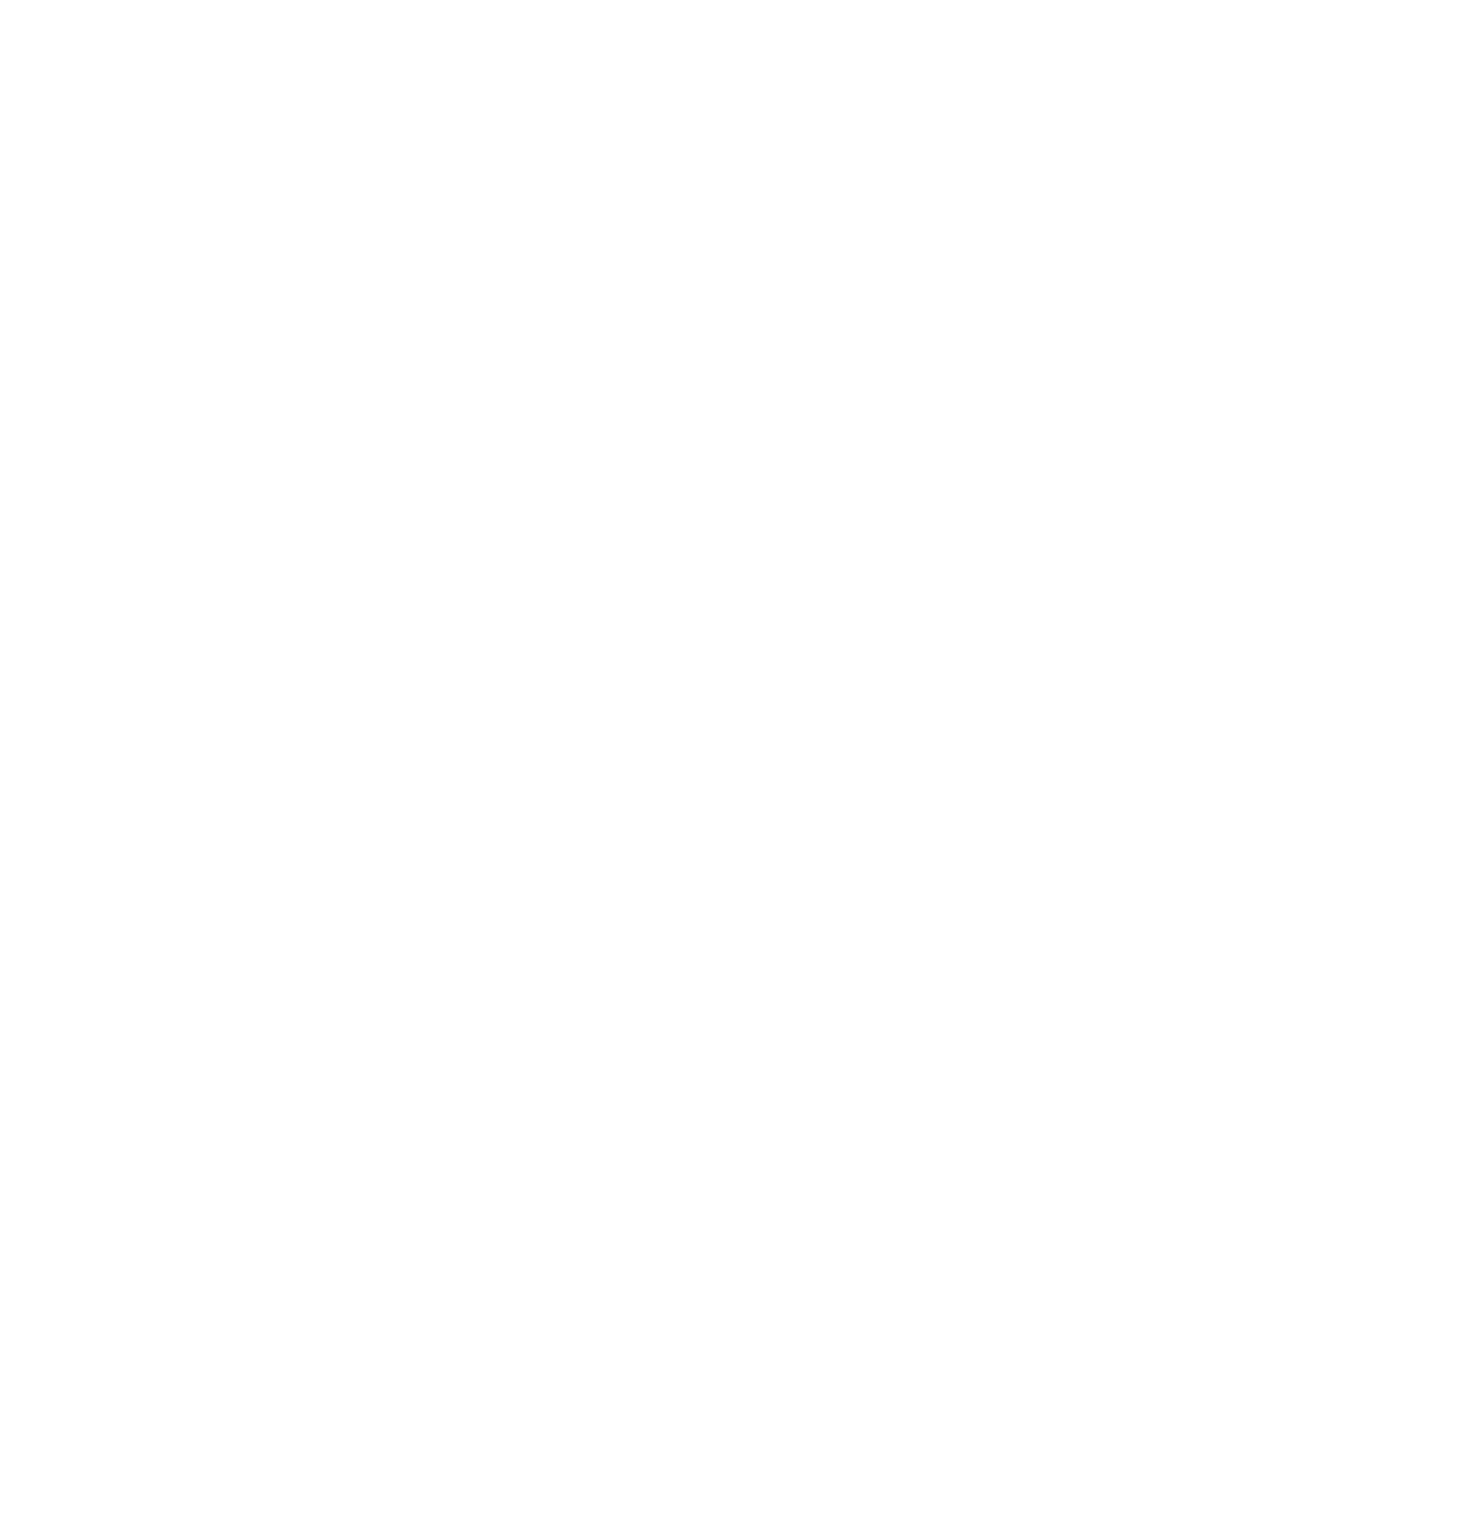 Duke Energy logo pour fonds sombres (PNG transparent)